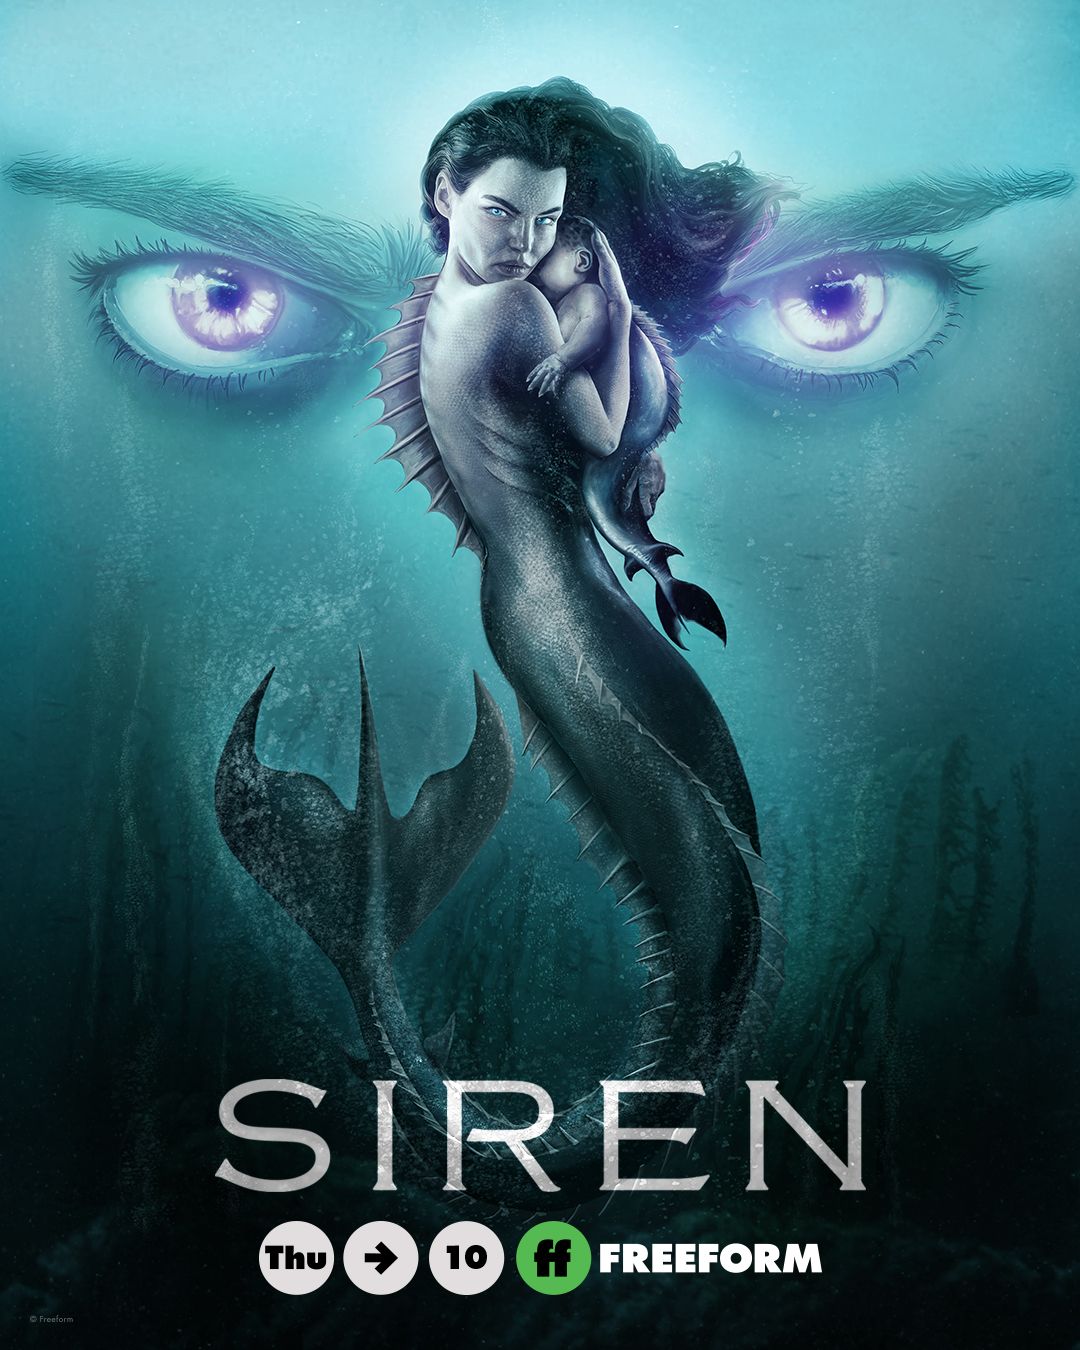 Mermaid TV series Siren's fate confirmed after s3 cliffhanger